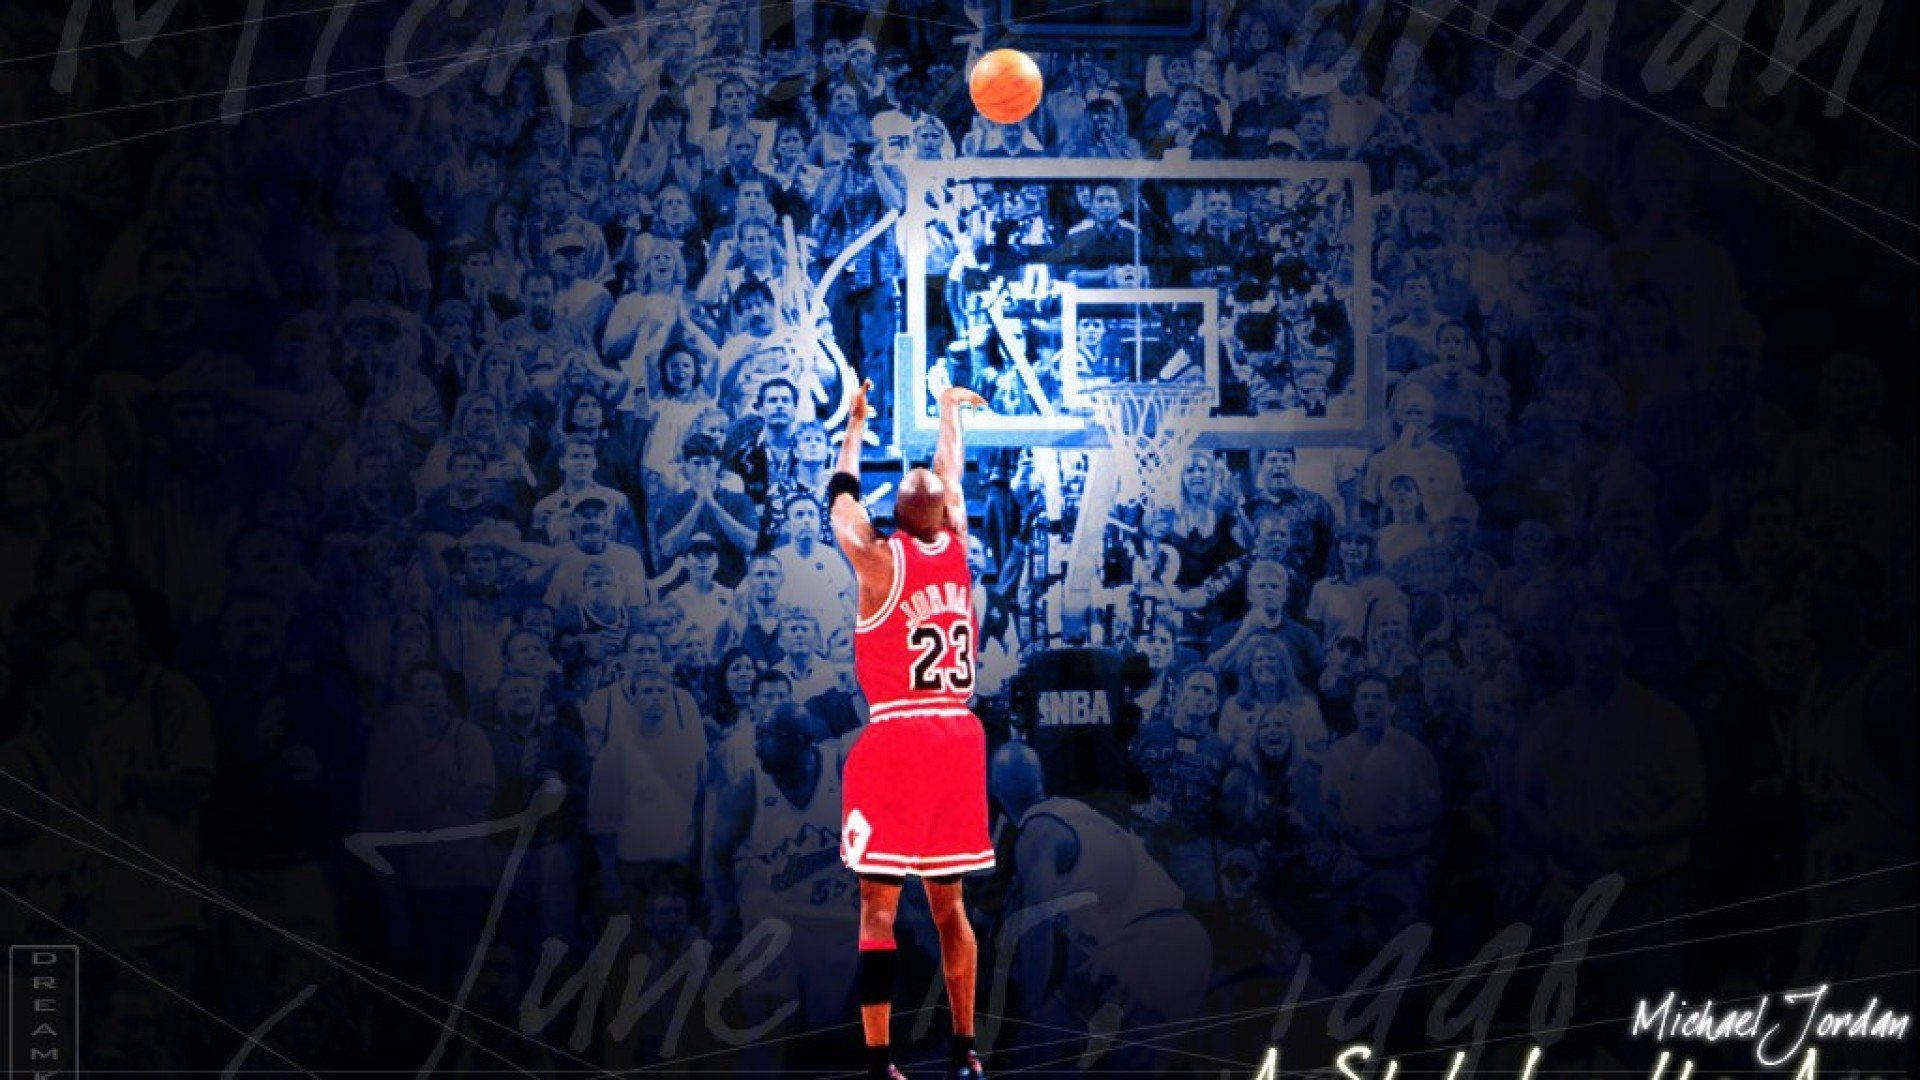 Michael Jordan Nba Winning Shot Moment Background